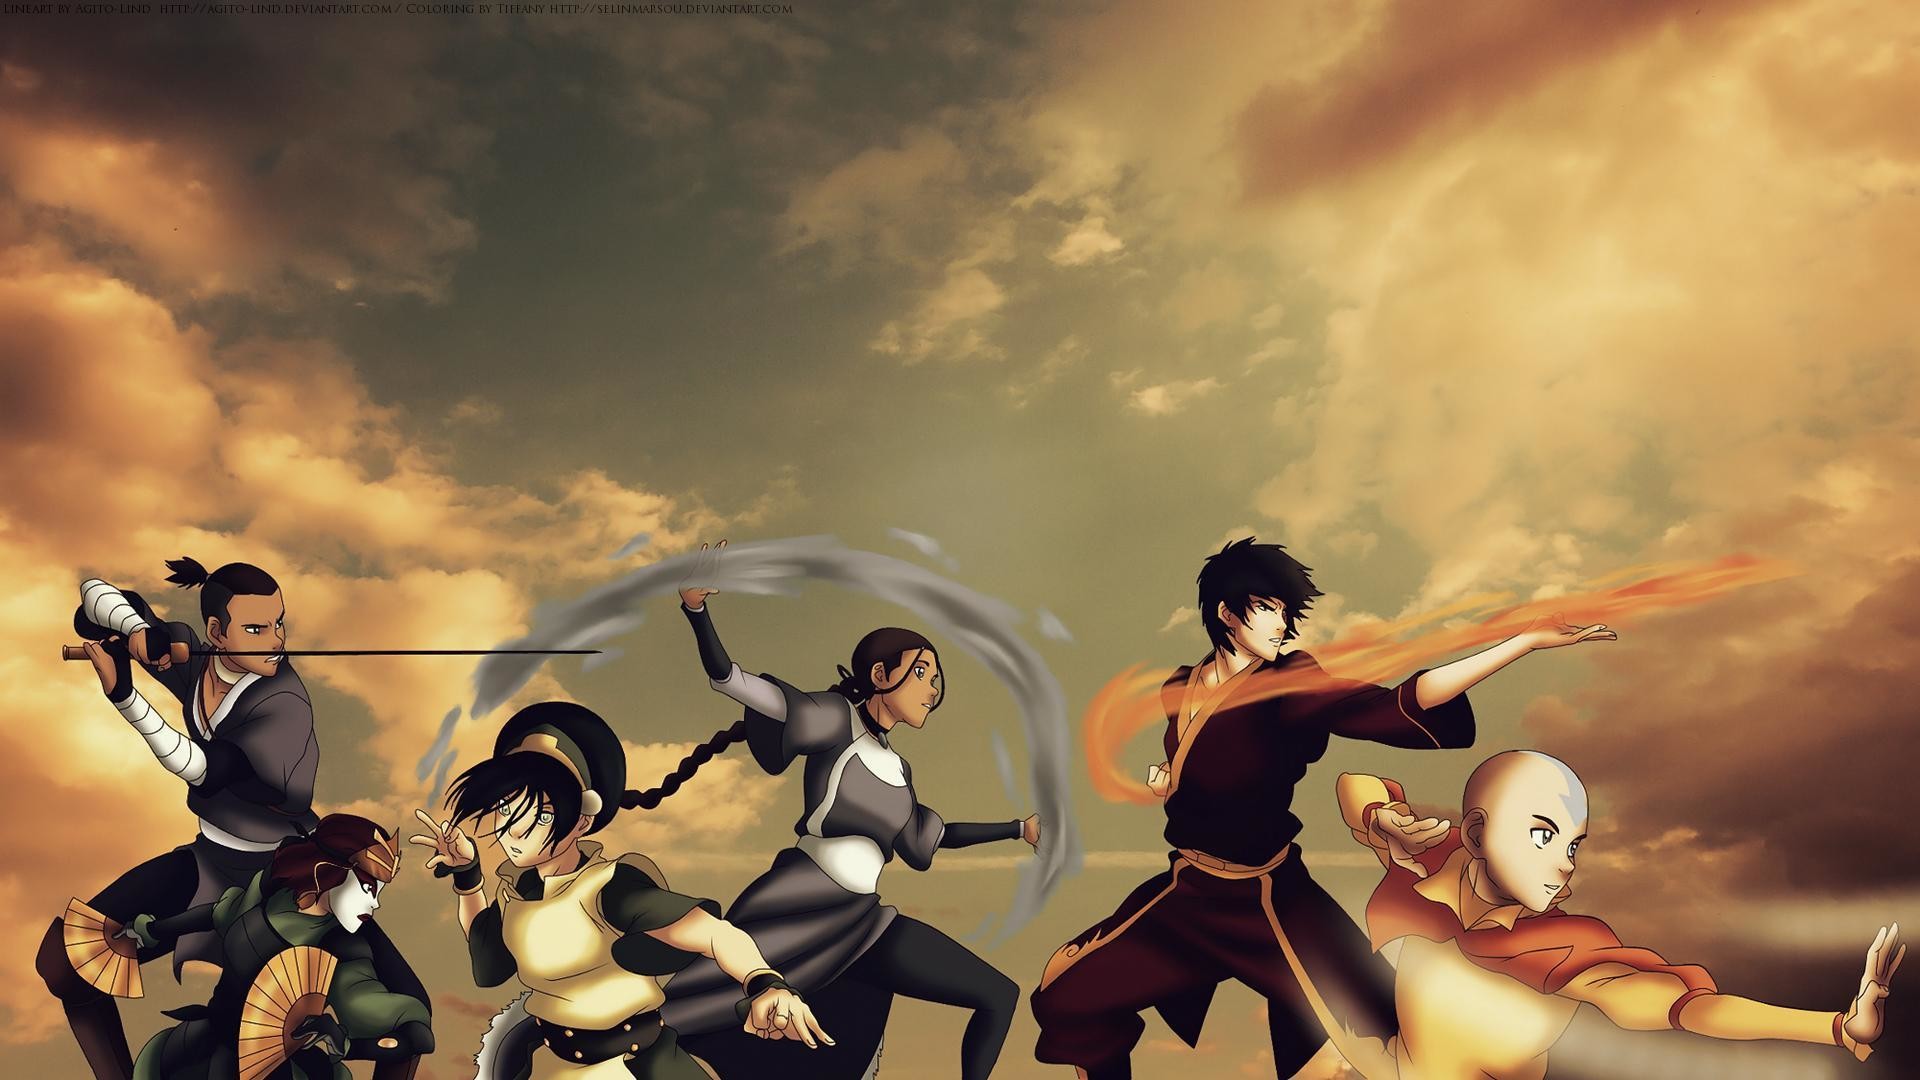 Avatar The Last Airbender Anime Poster Wall Manga Print | eBay